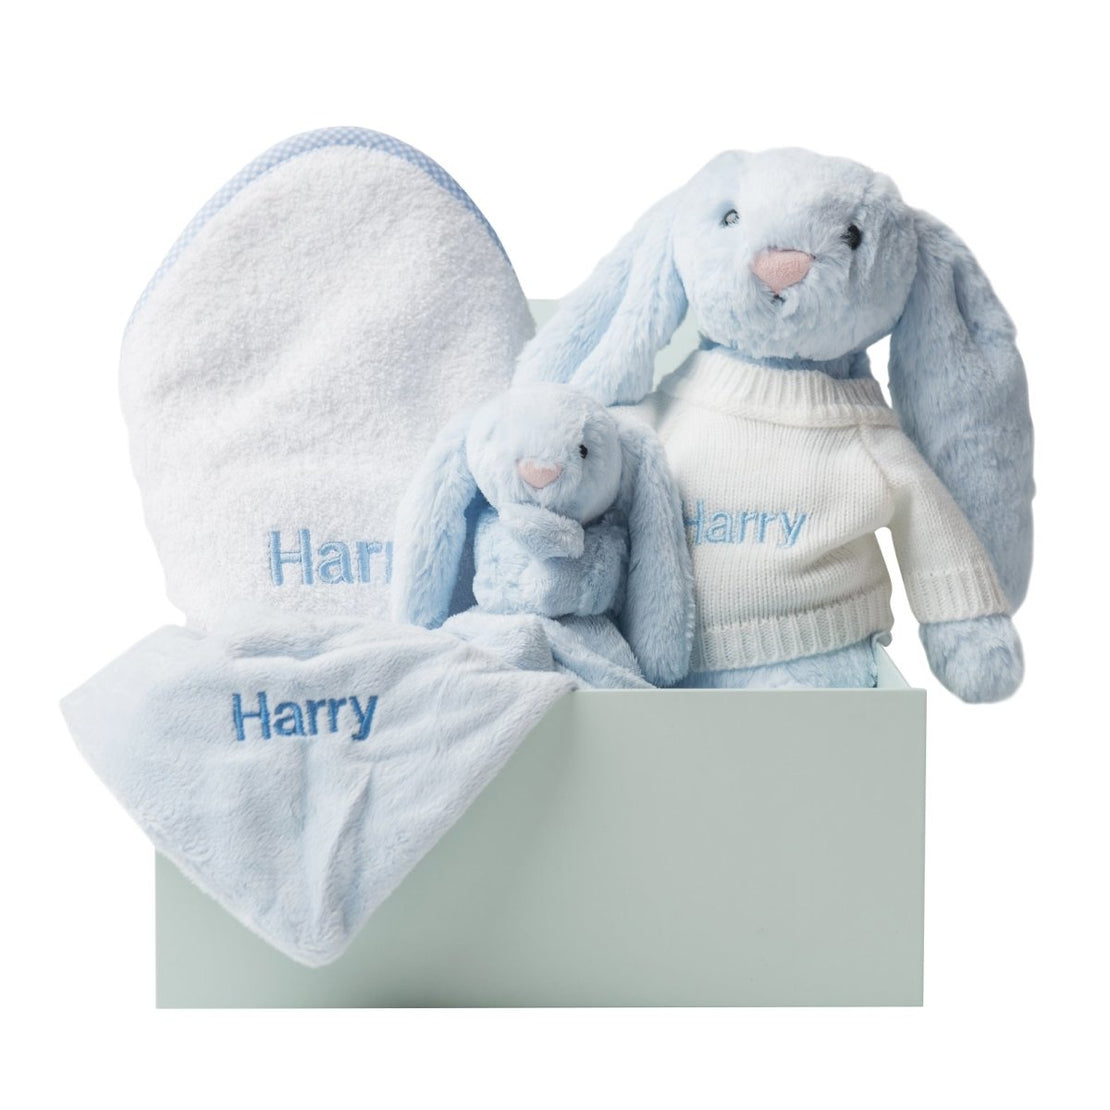 Personalised Bathtime, Bunny and Comforter Snuggle Set - Blue - LOVINGLY SIGNED (HK)